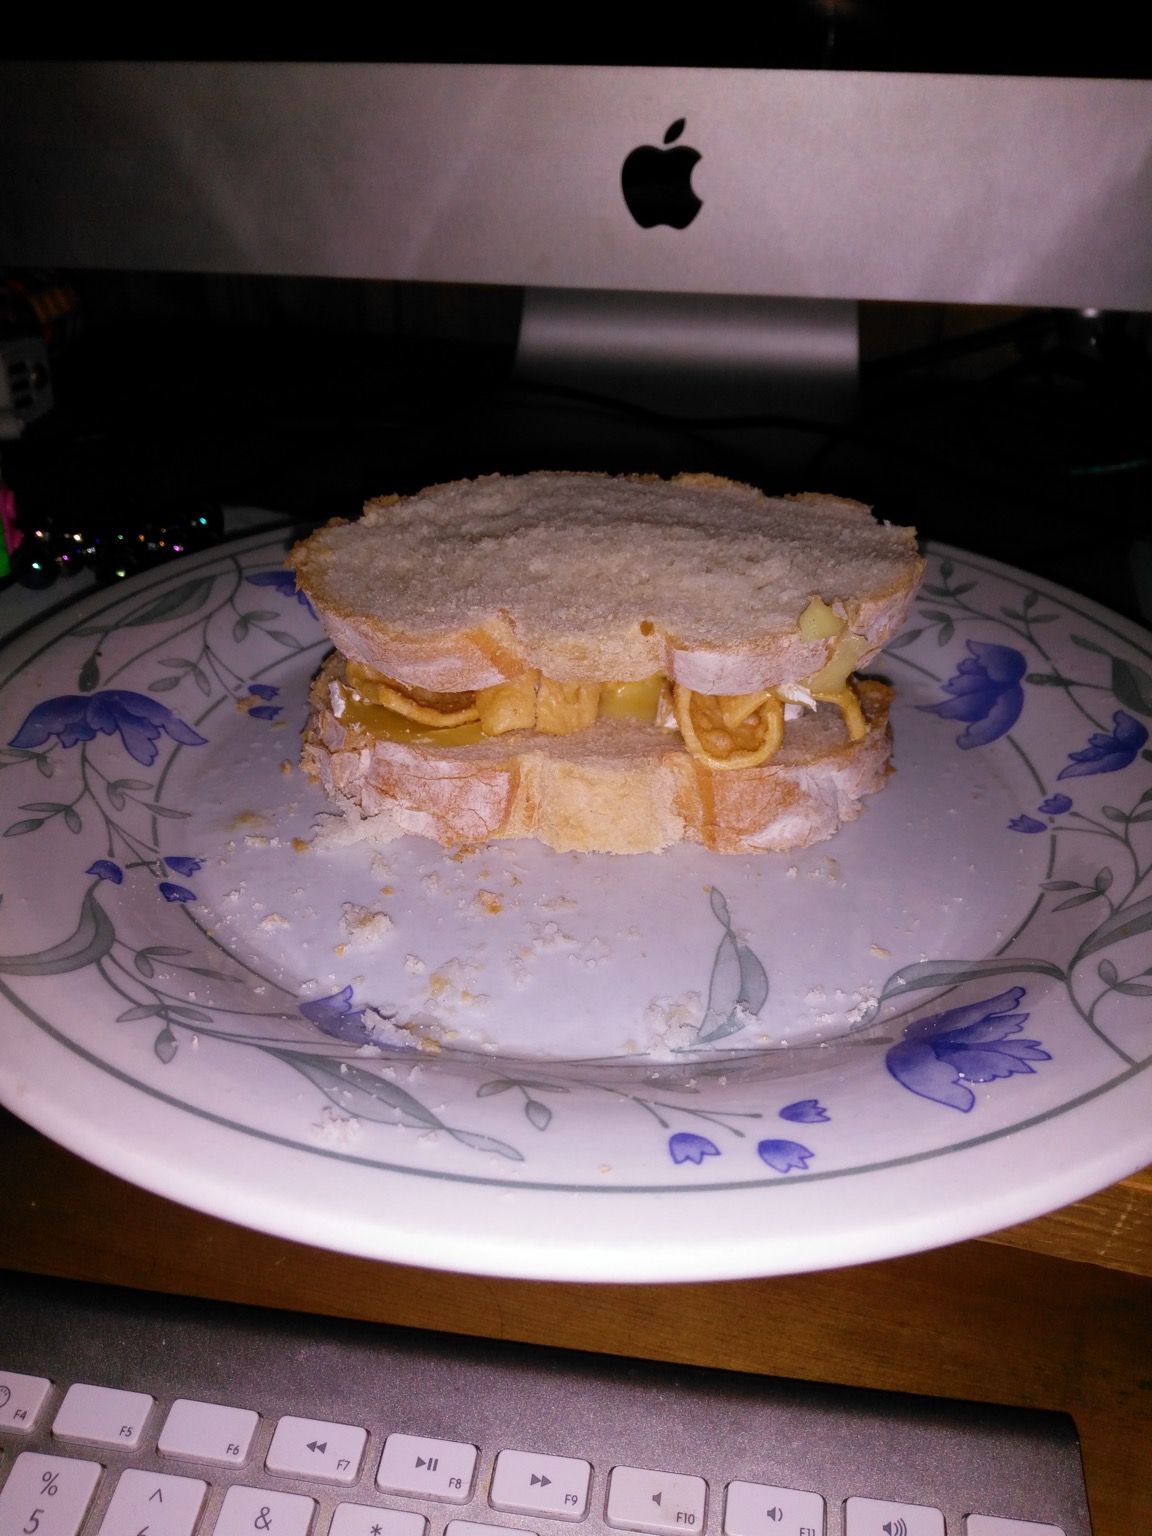 Flash photo of sandwich containing corn snacks